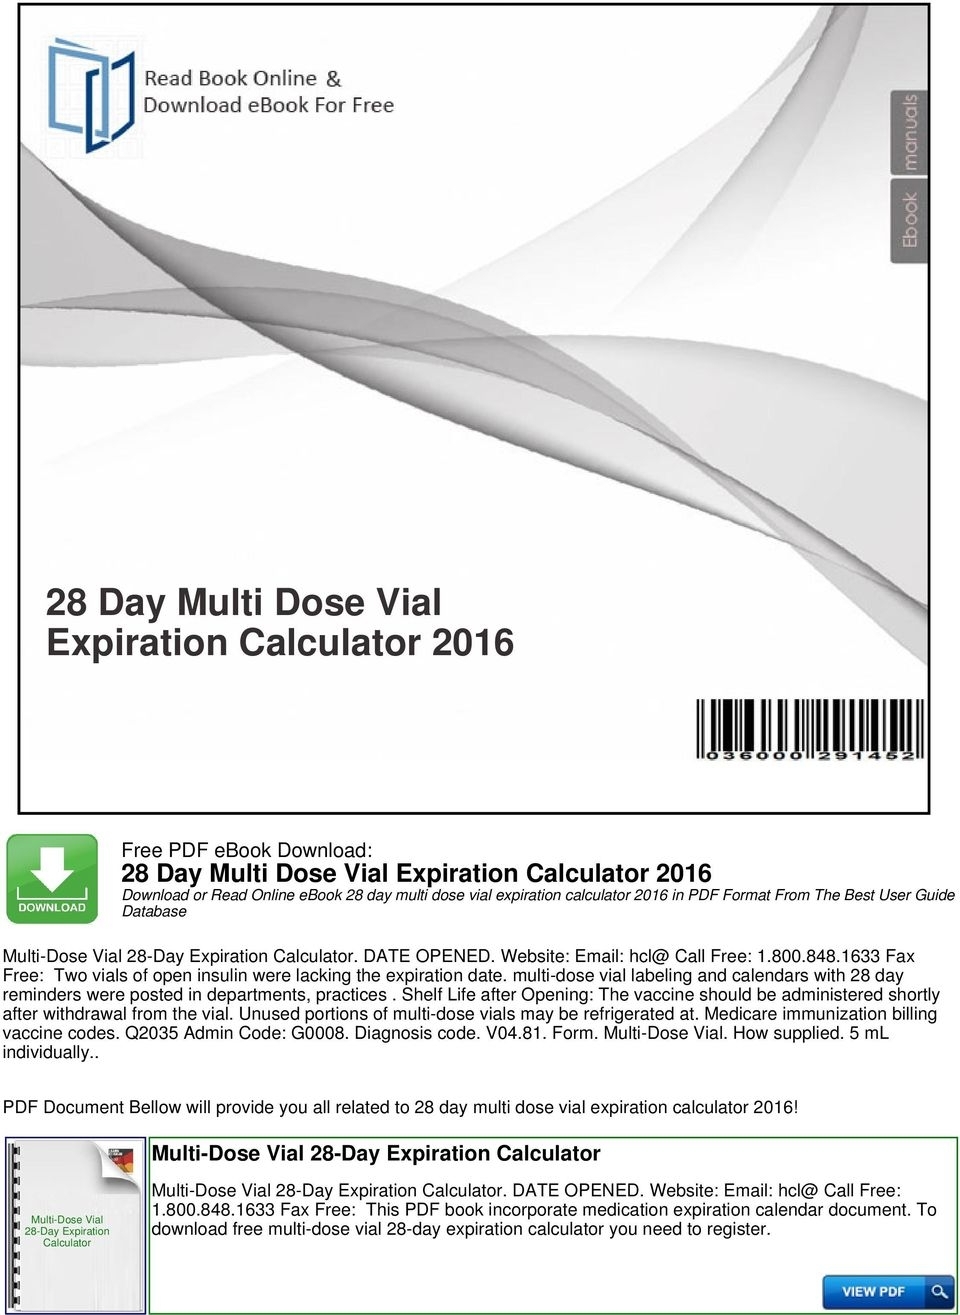 28 Day Multi Dose Vial Expiration Calculator Pdf Free Download